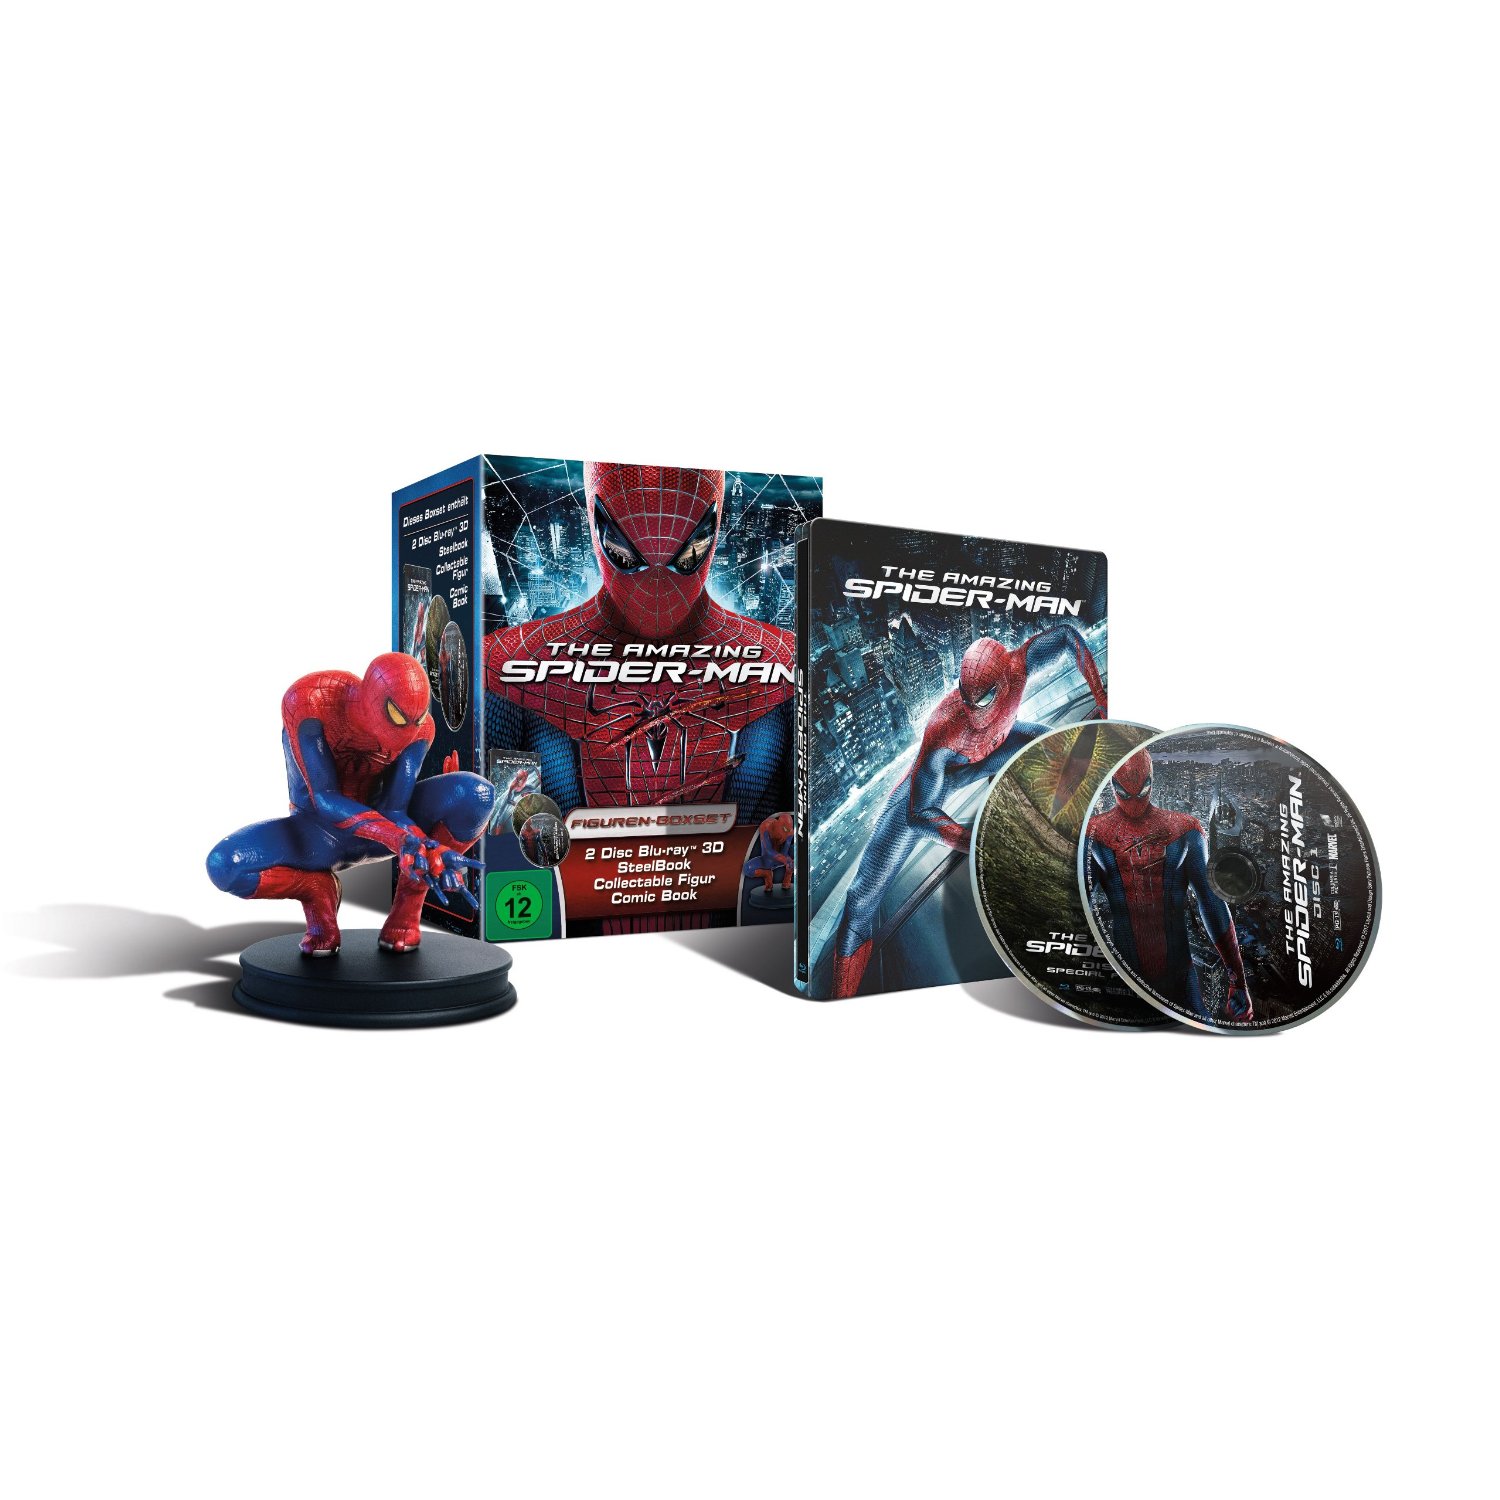 01.The Amazing Spider-Man[3D] de.jpg